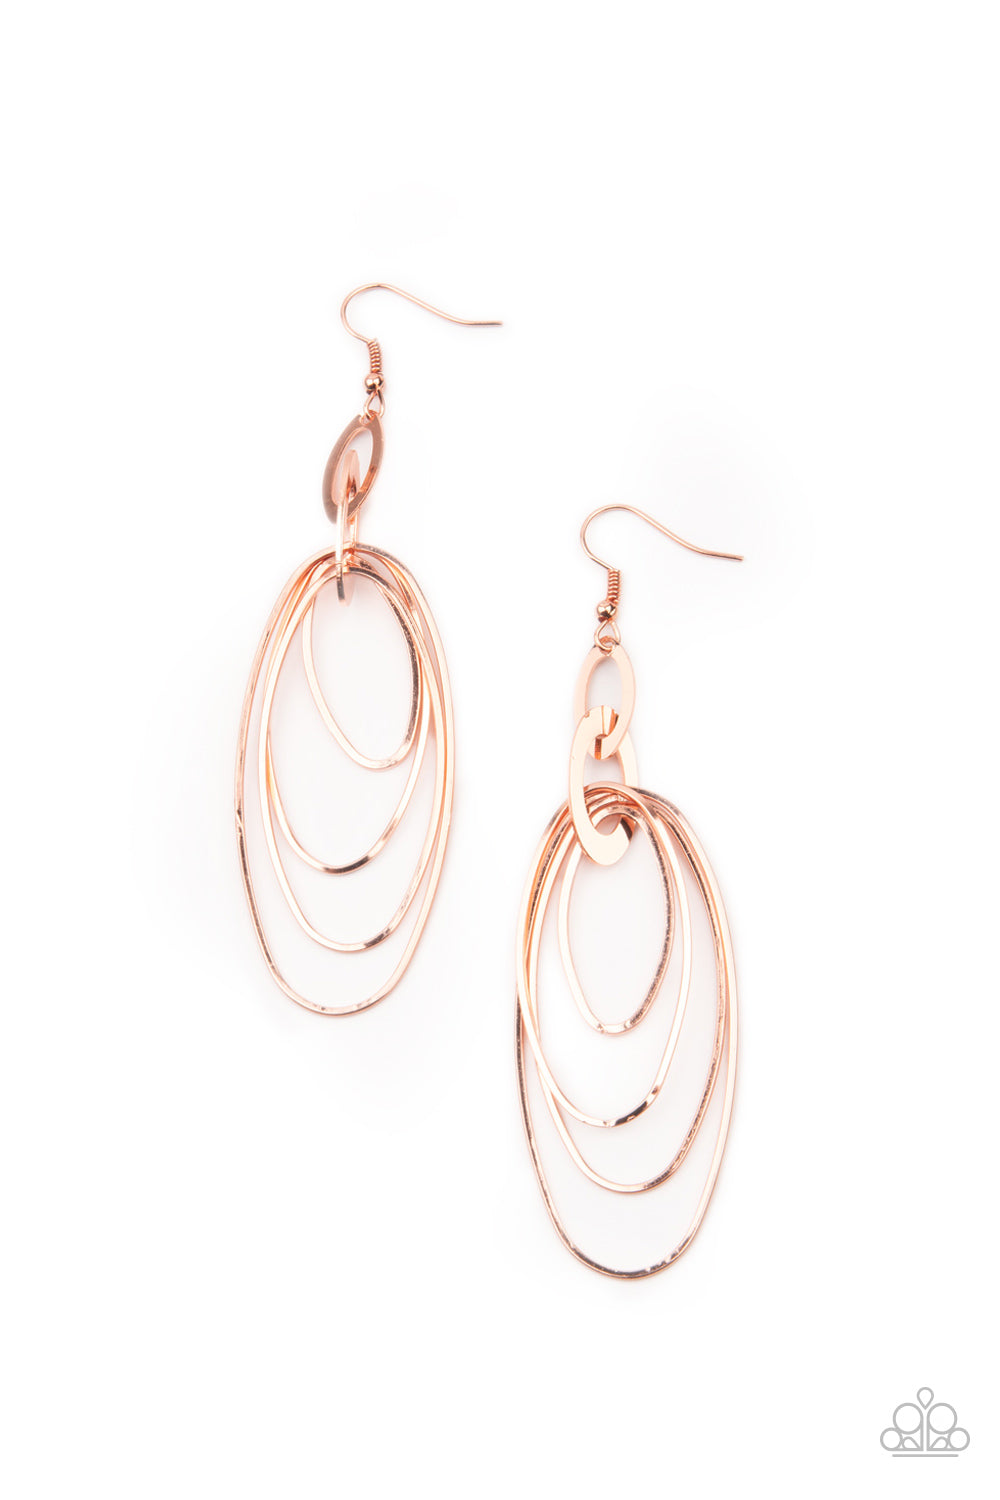 OVAL the Moon - copper - Paparazzi earrings